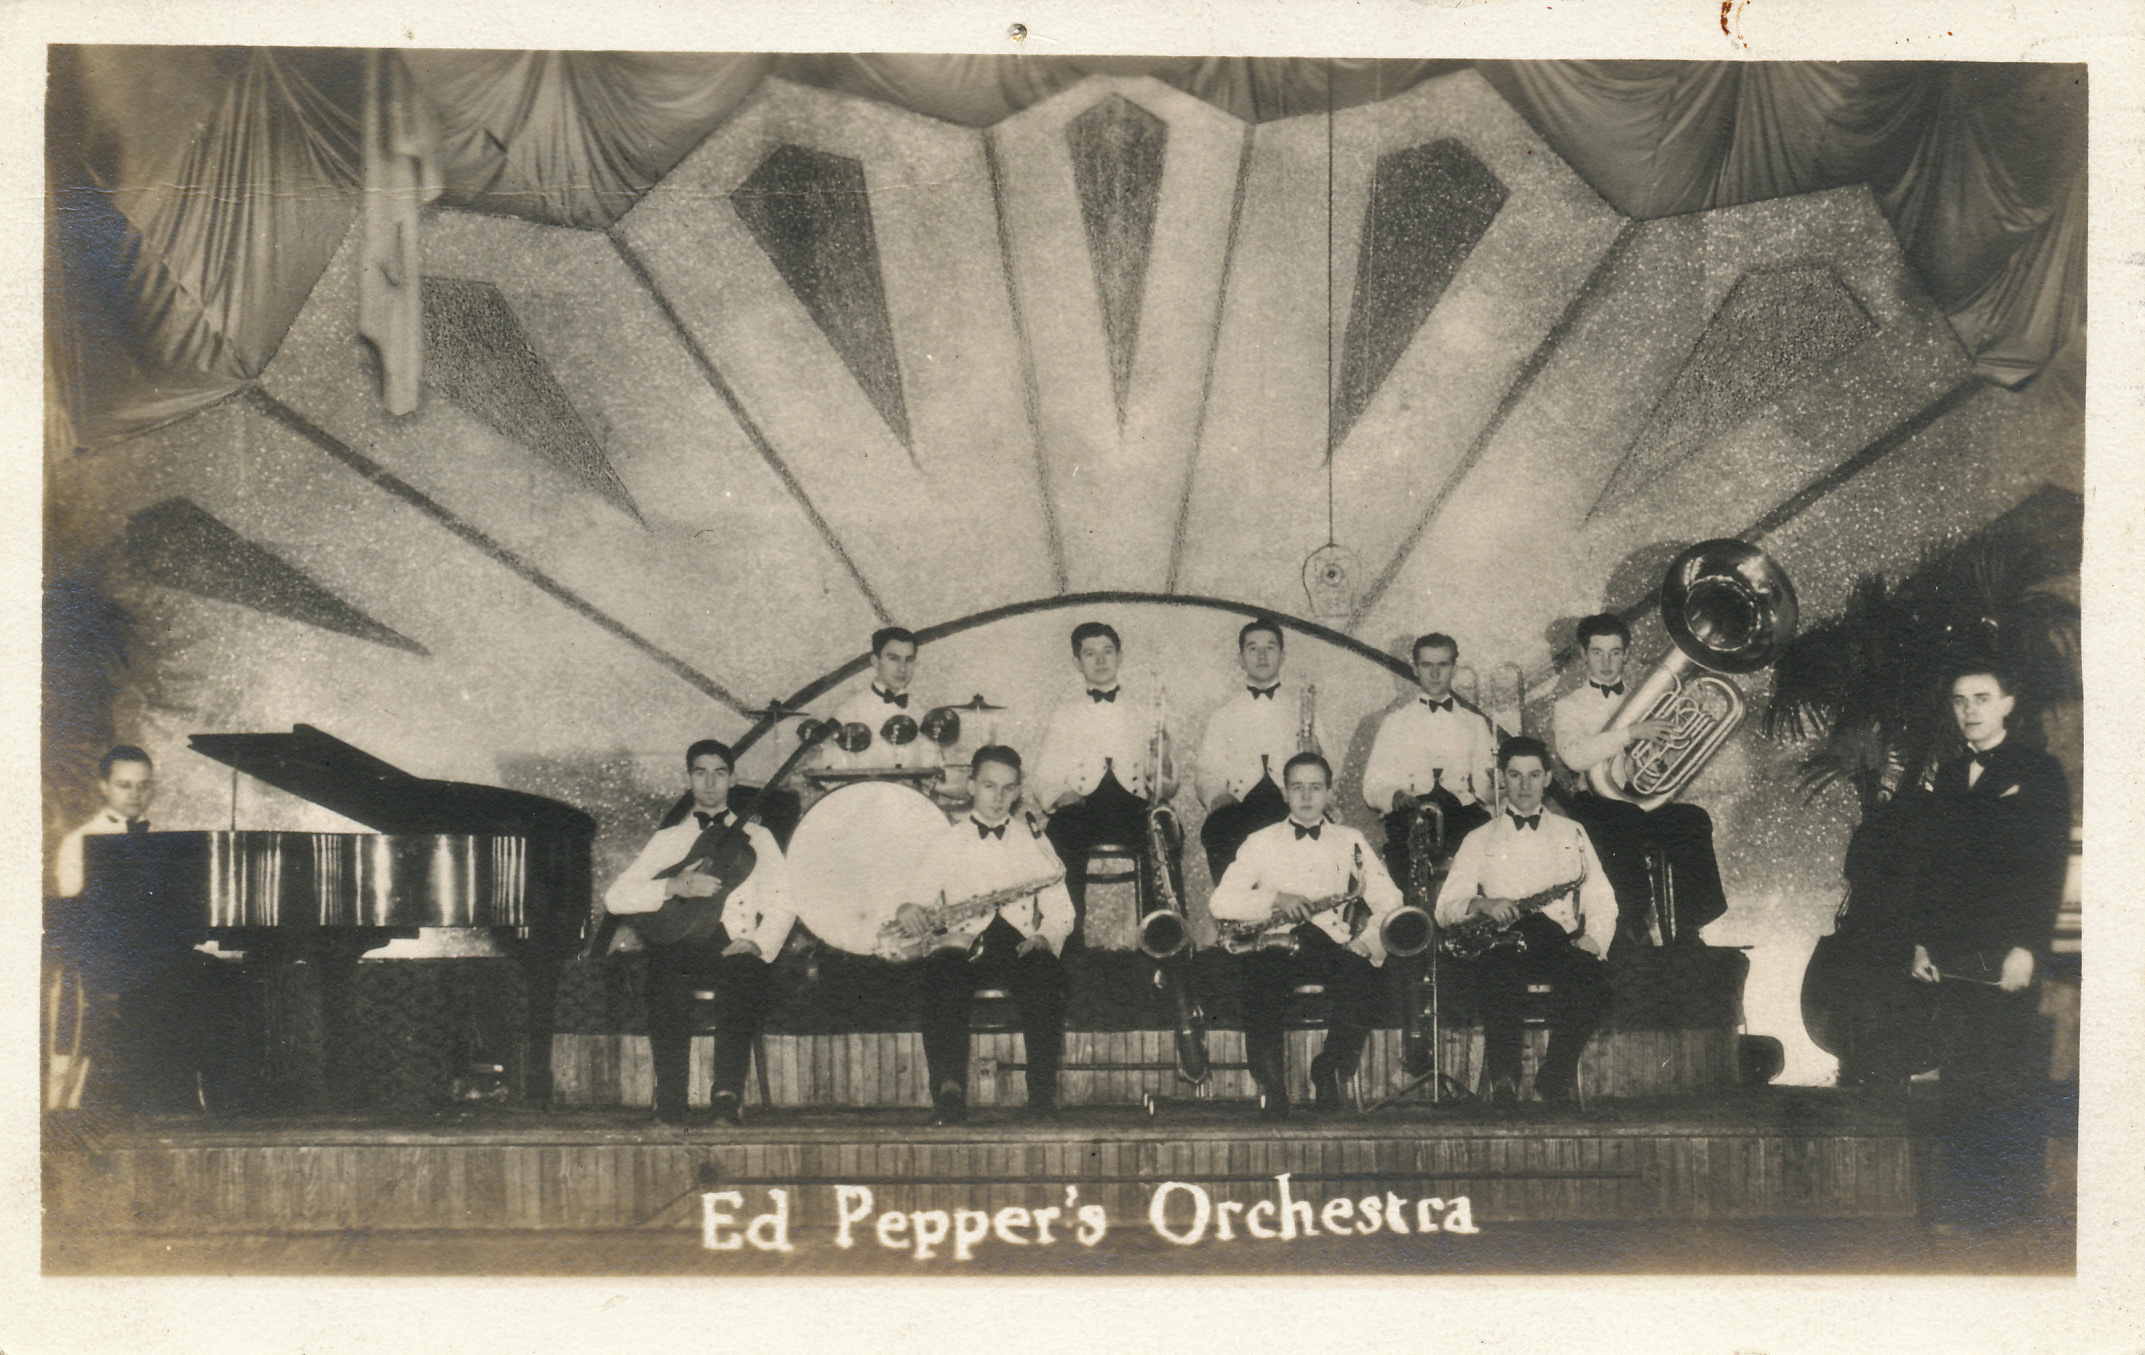 http://jrandomimage.com/images/ed-peppers-orchestra.jpg